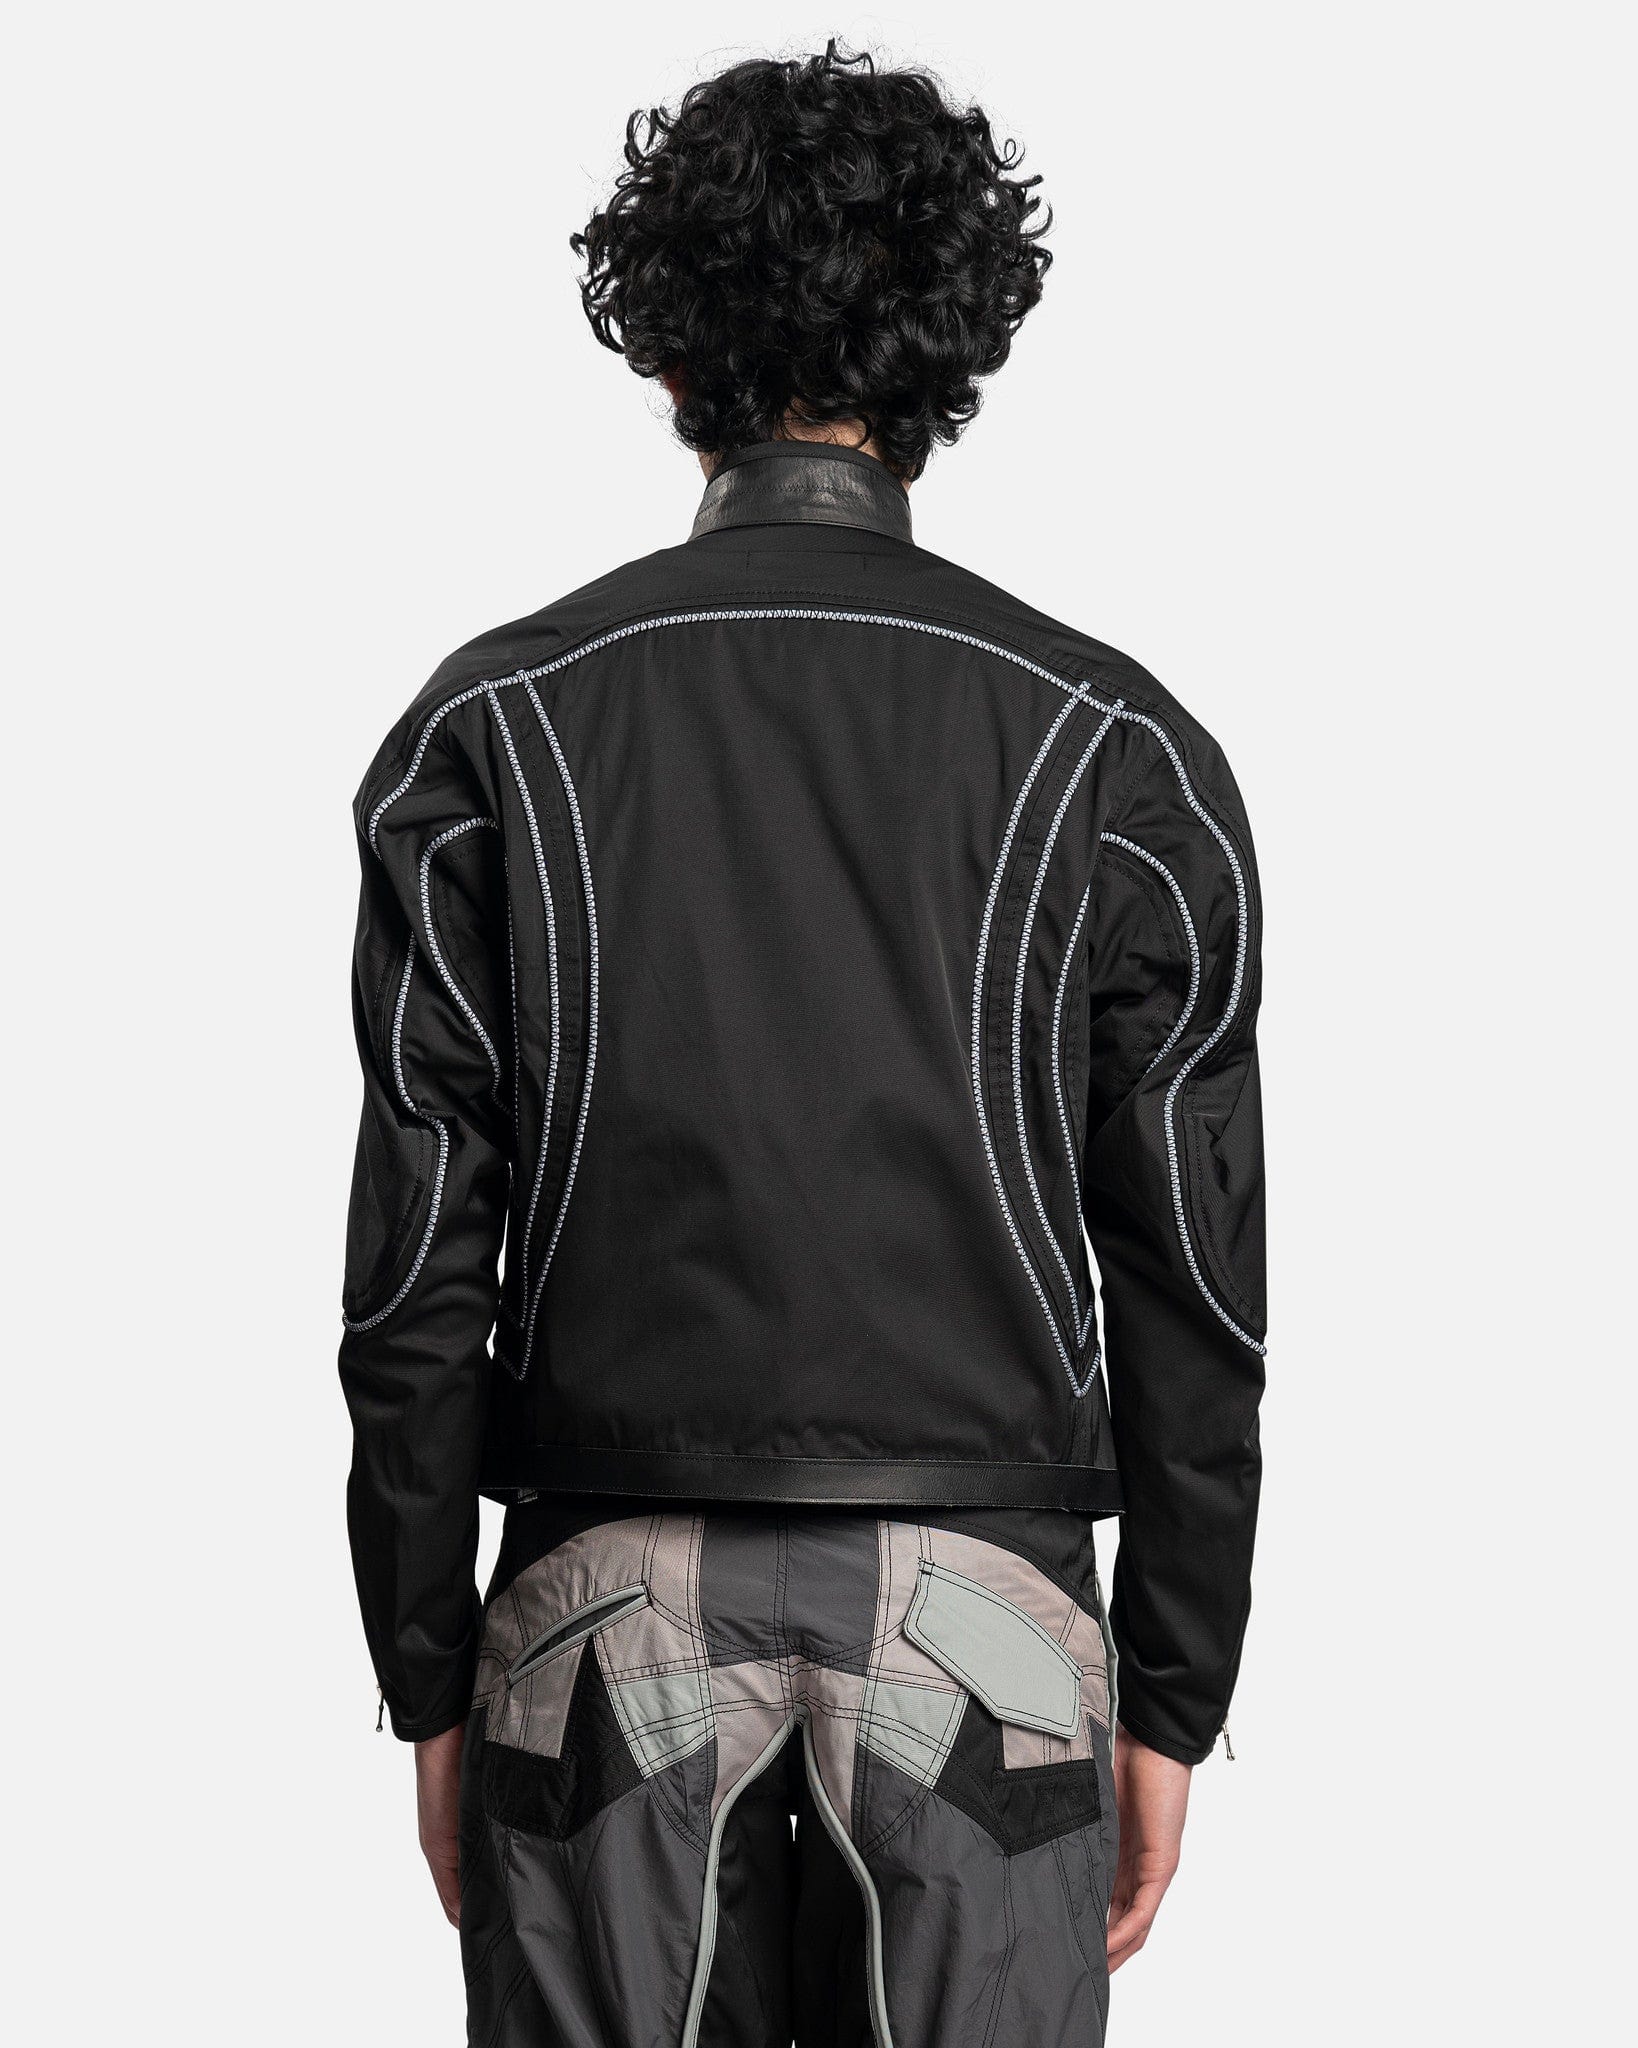 FFFPOSTALSERVICE Men's Jackets Diffraction Hunter Jacket in Black